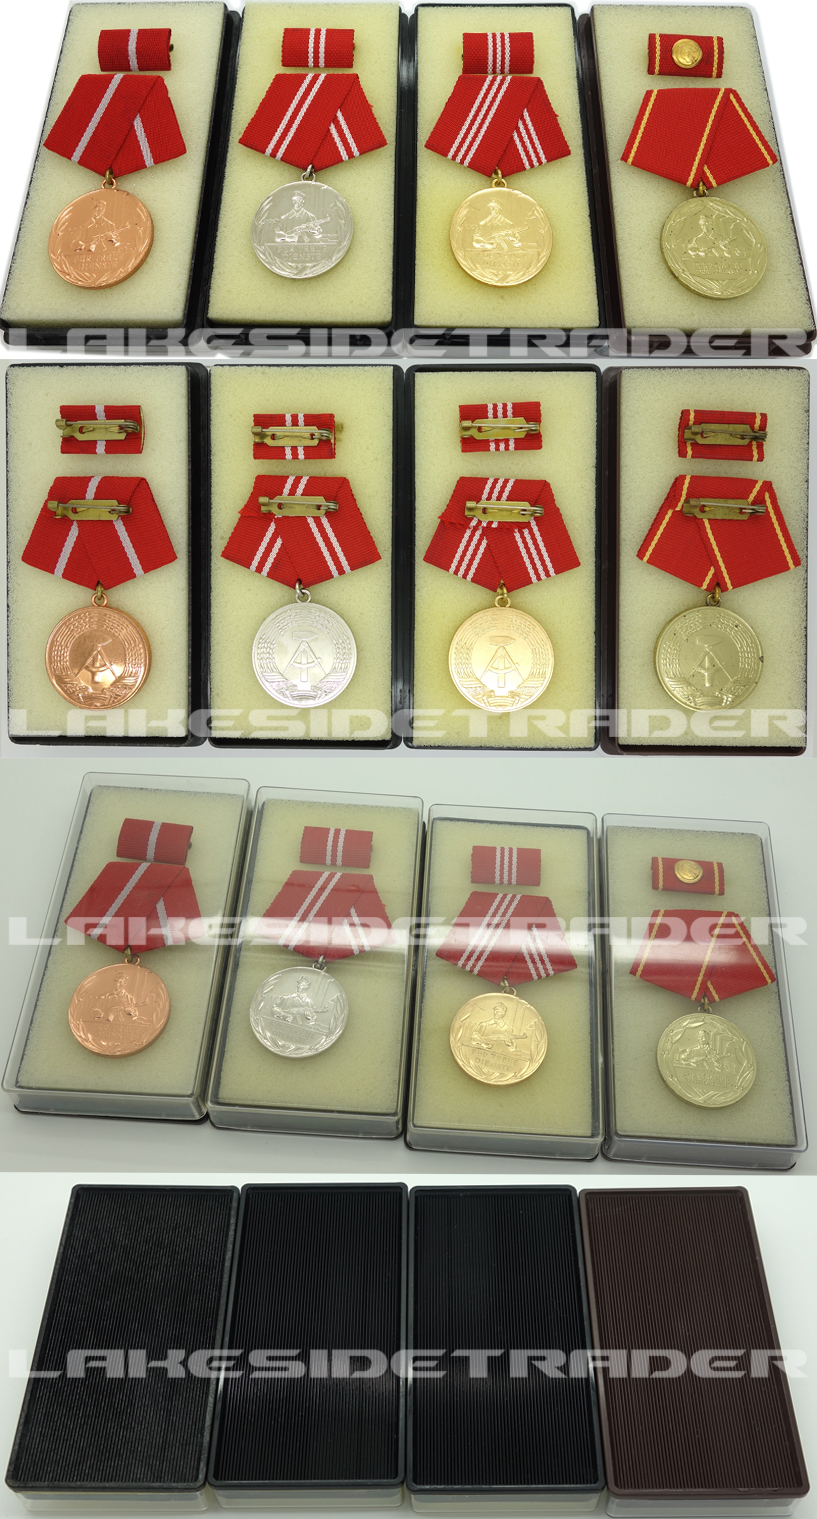 East German - NVA Faithful Service Medals